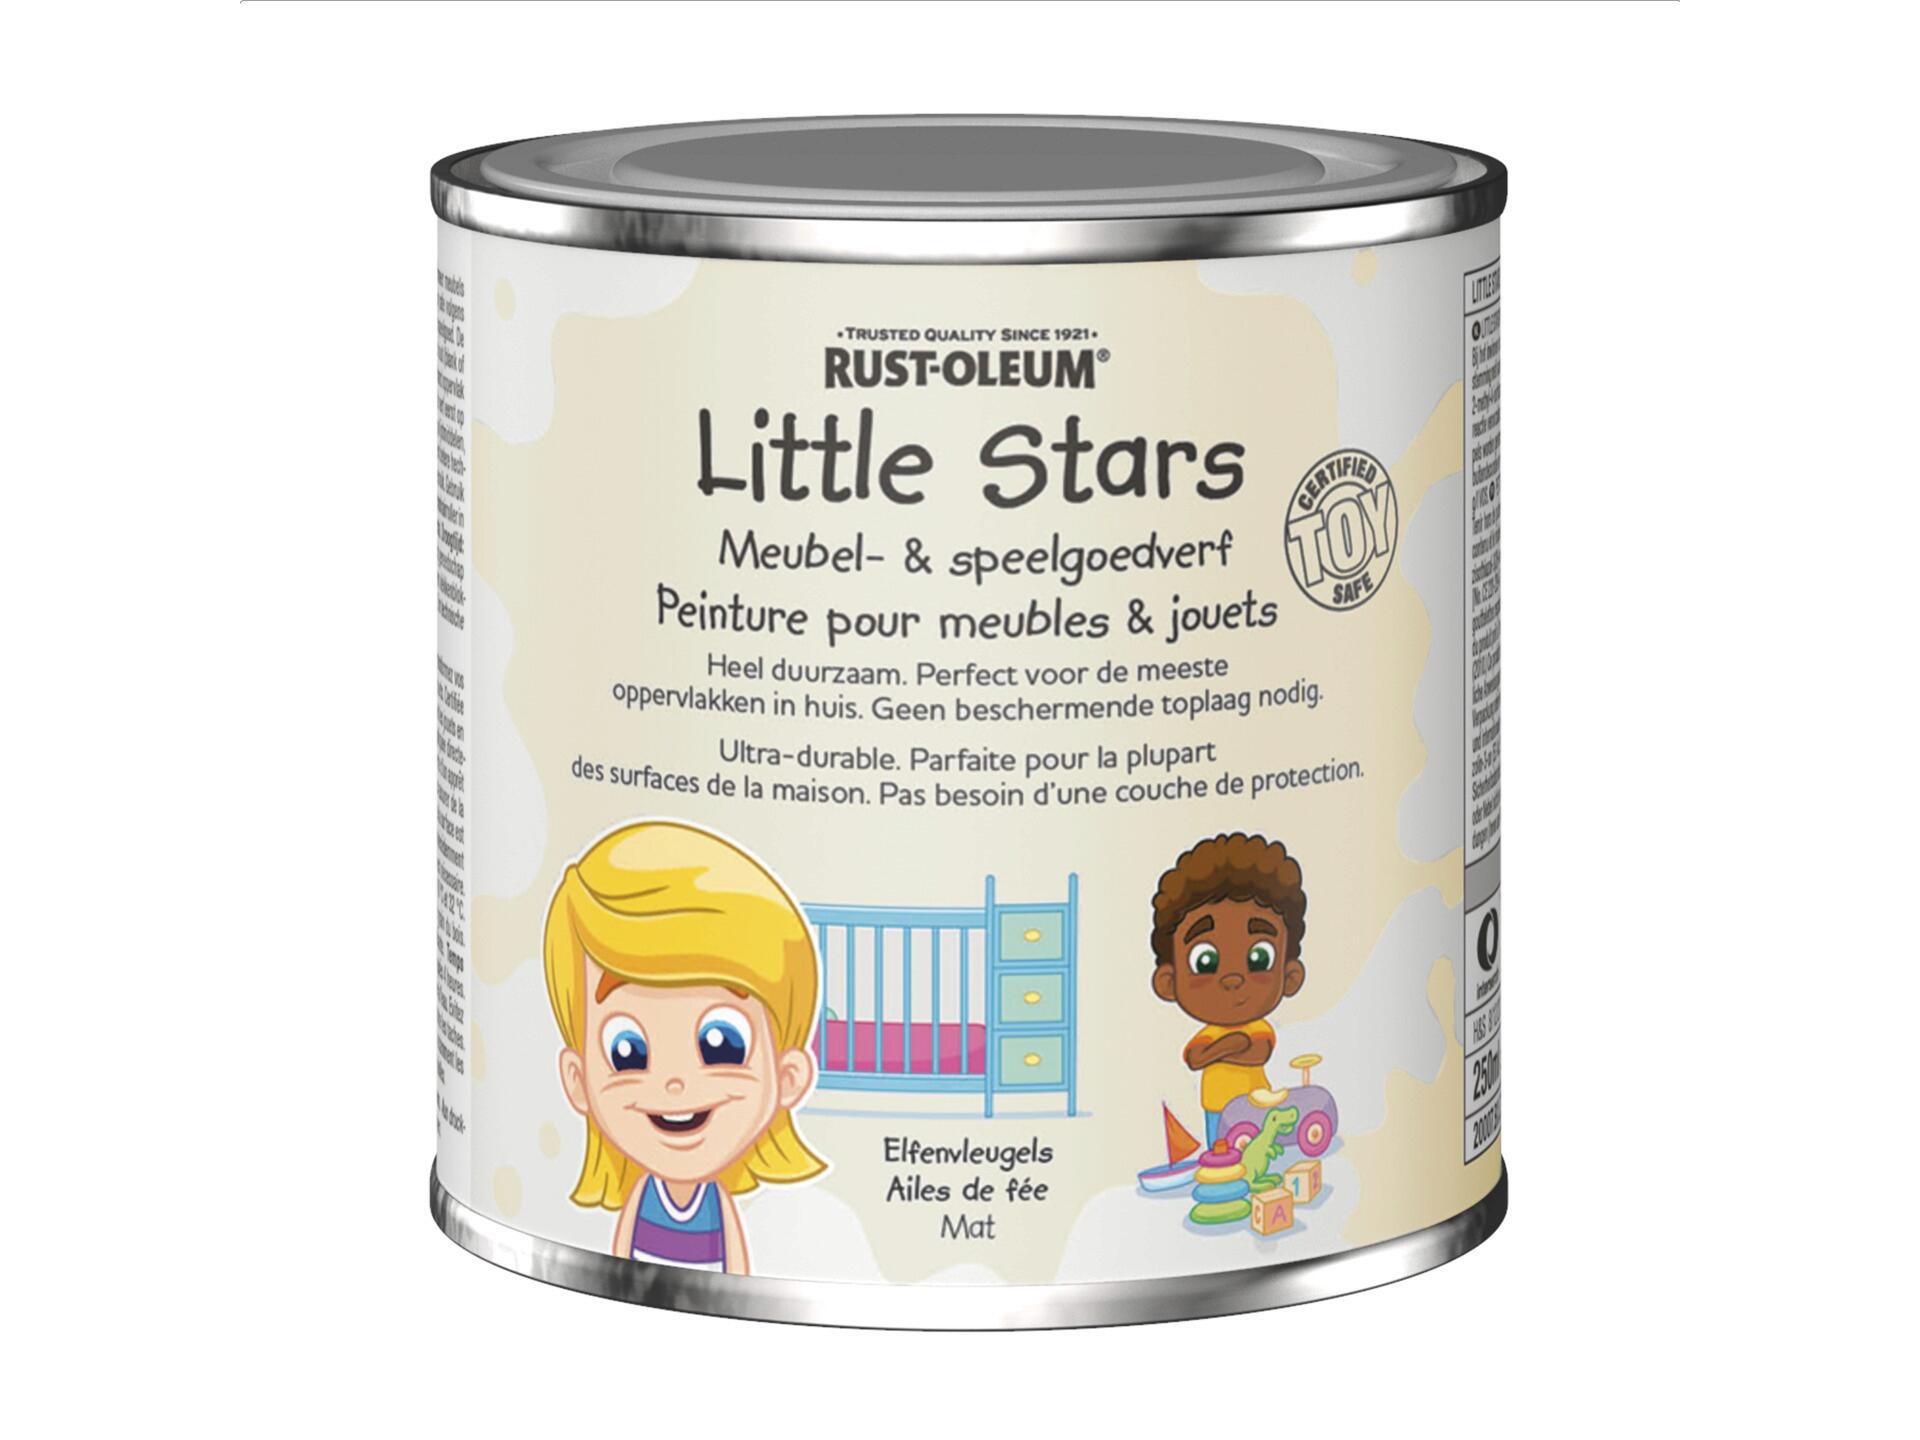 Rust-oleum Little Stars meubel- en speelgoedverf 250ml elfenvleugels